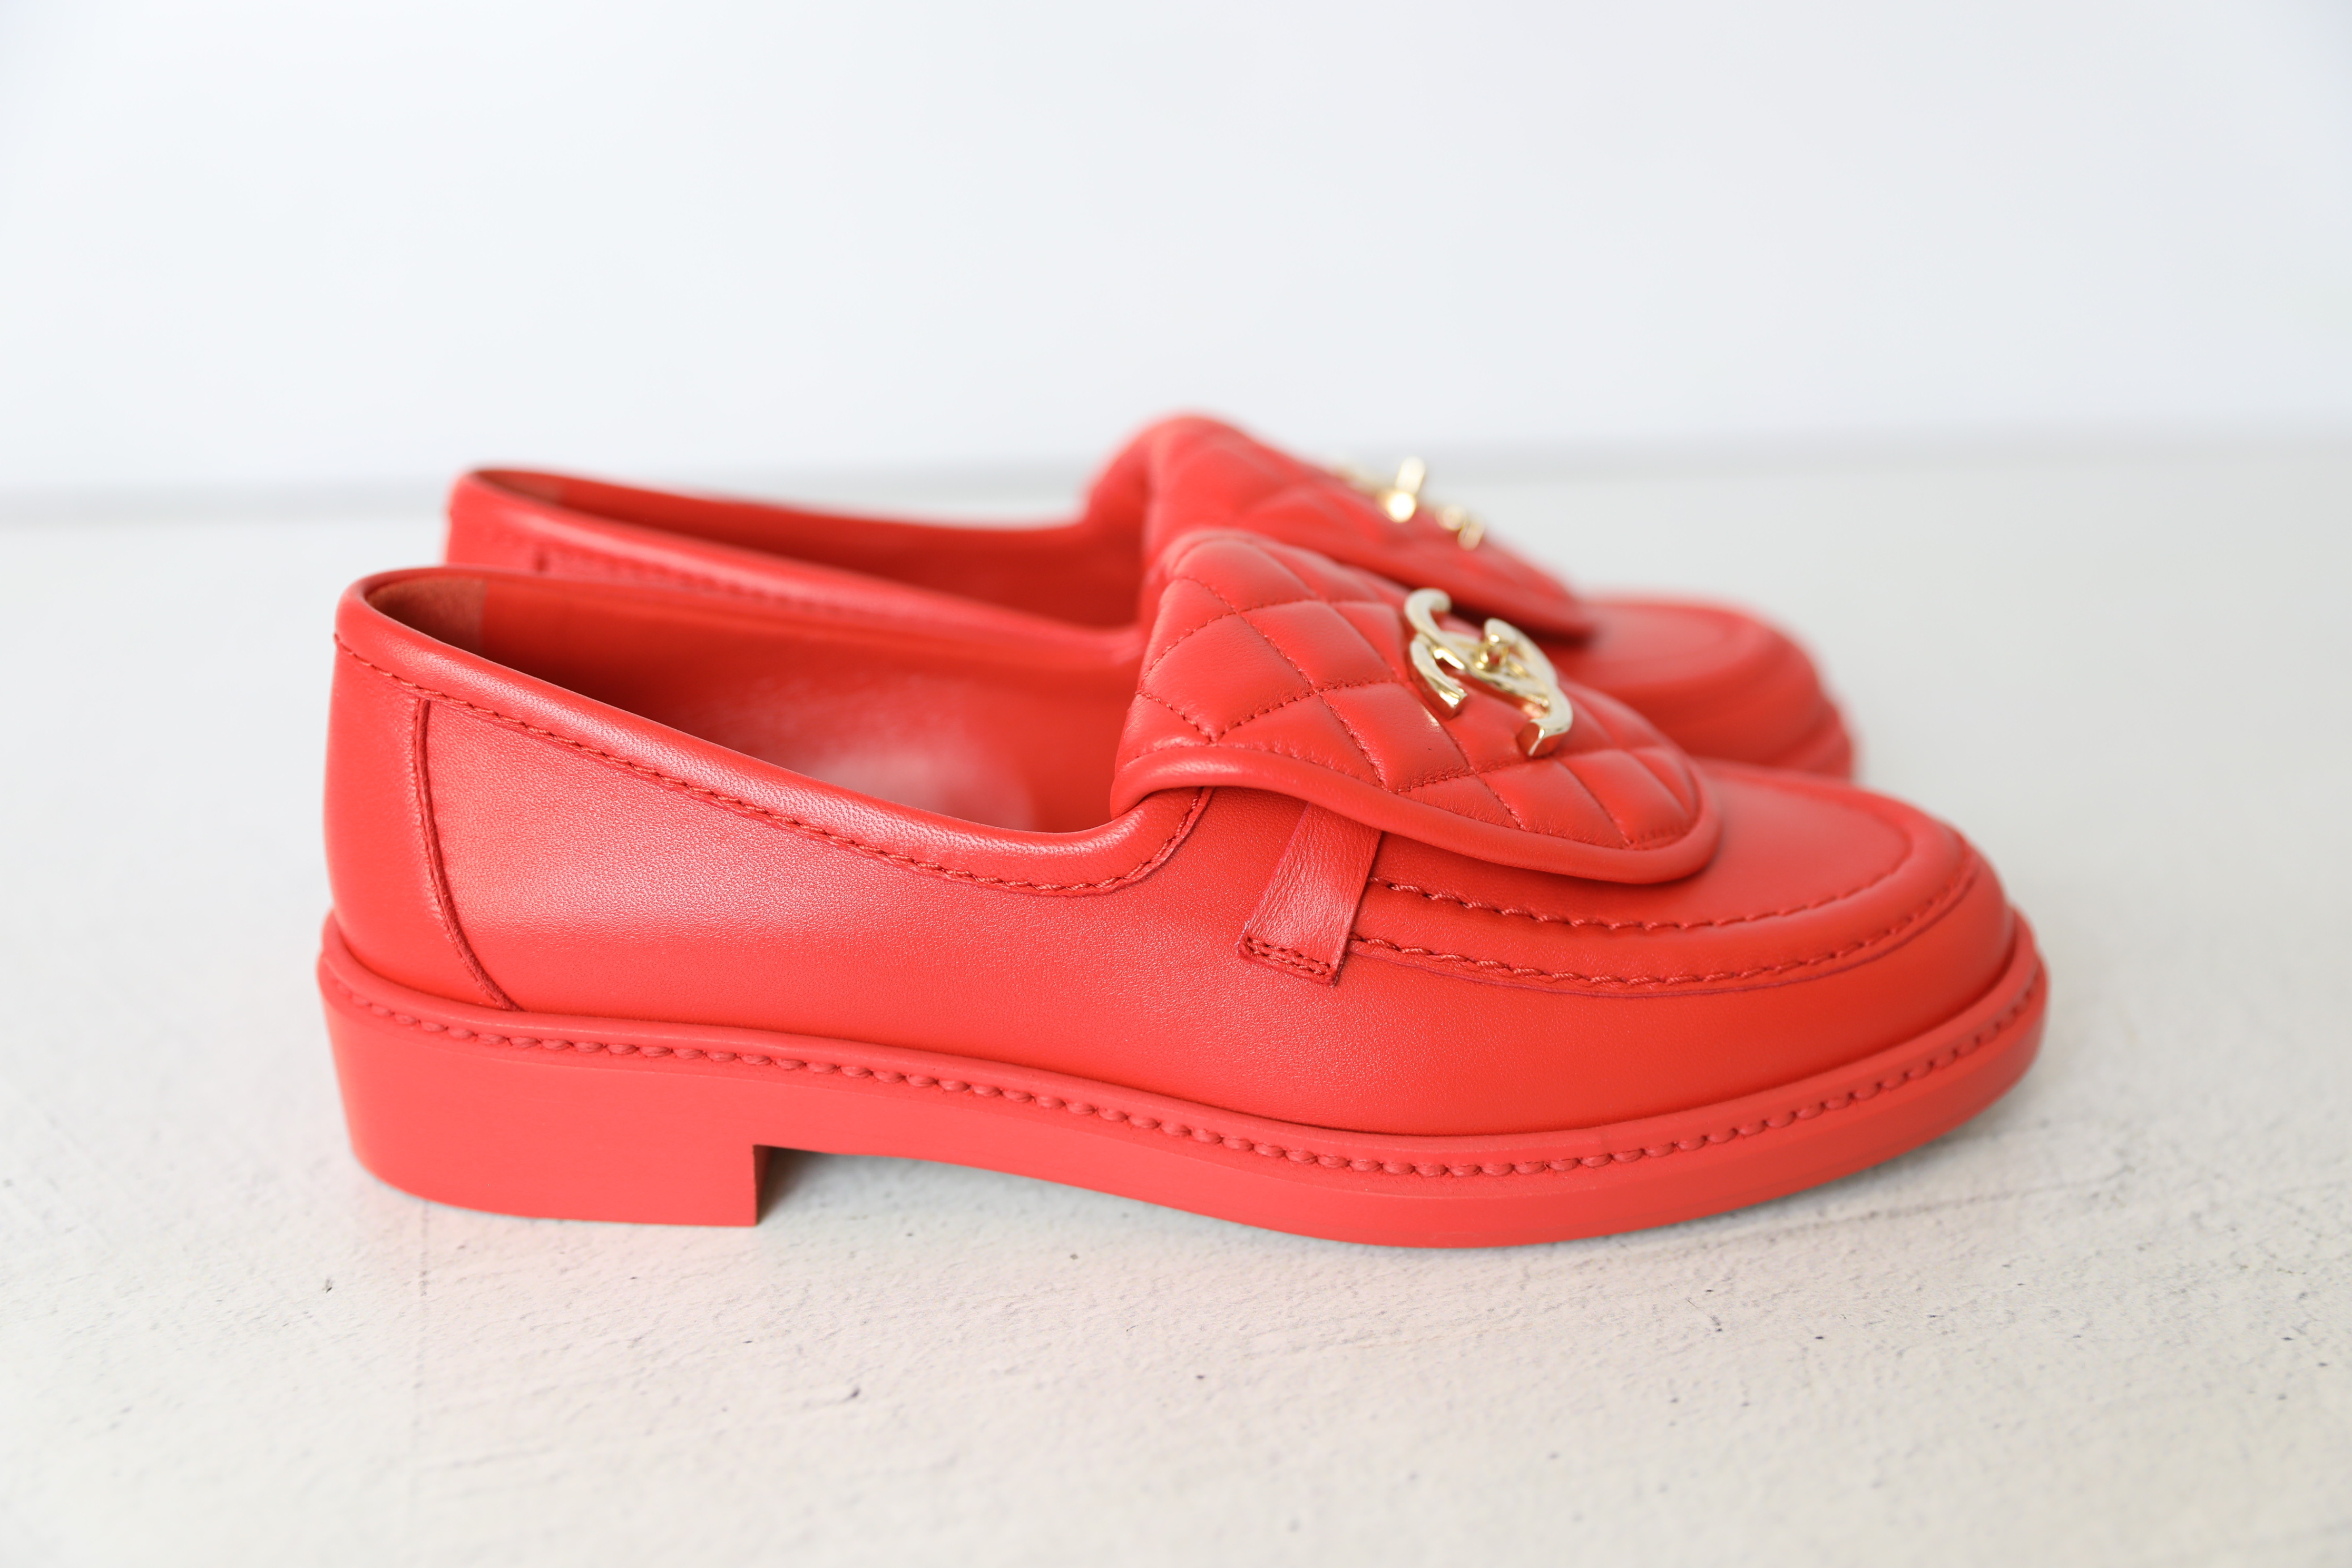 Chanel Turnlock Loafers, Red, Size 37, New in Box WA001 - Julia Rose Boston